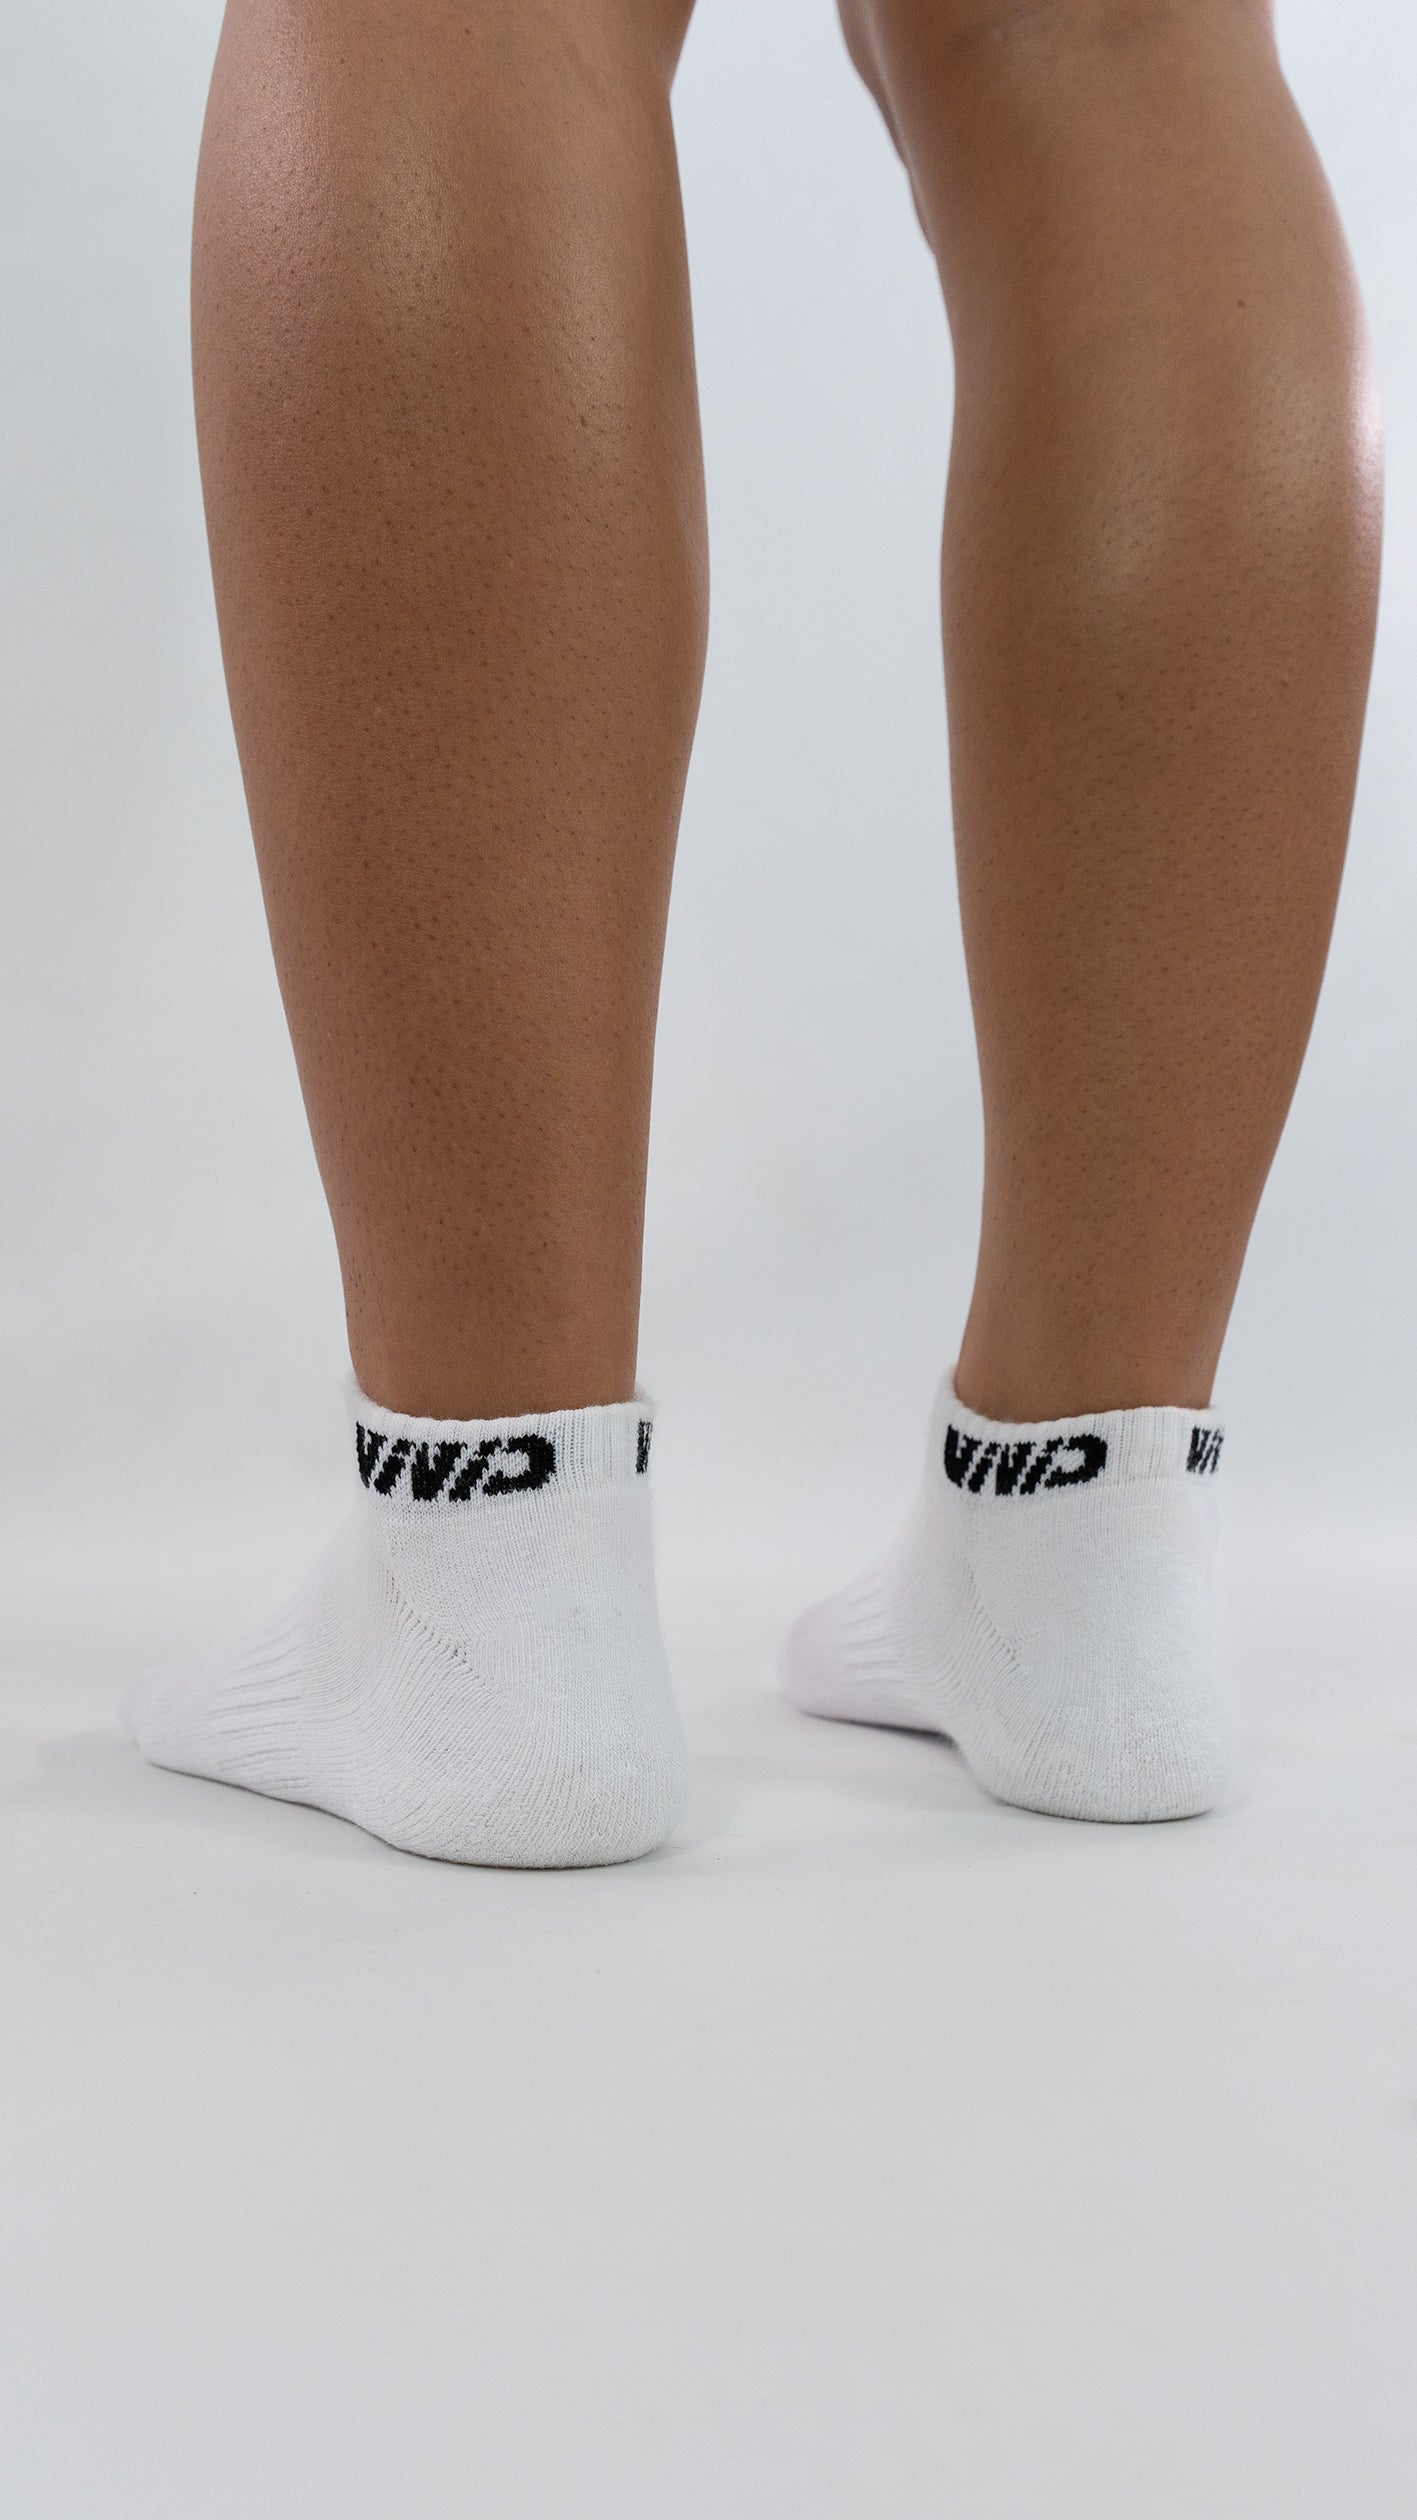 Cotton Ankle Socks - White - 1Pk - Unisex